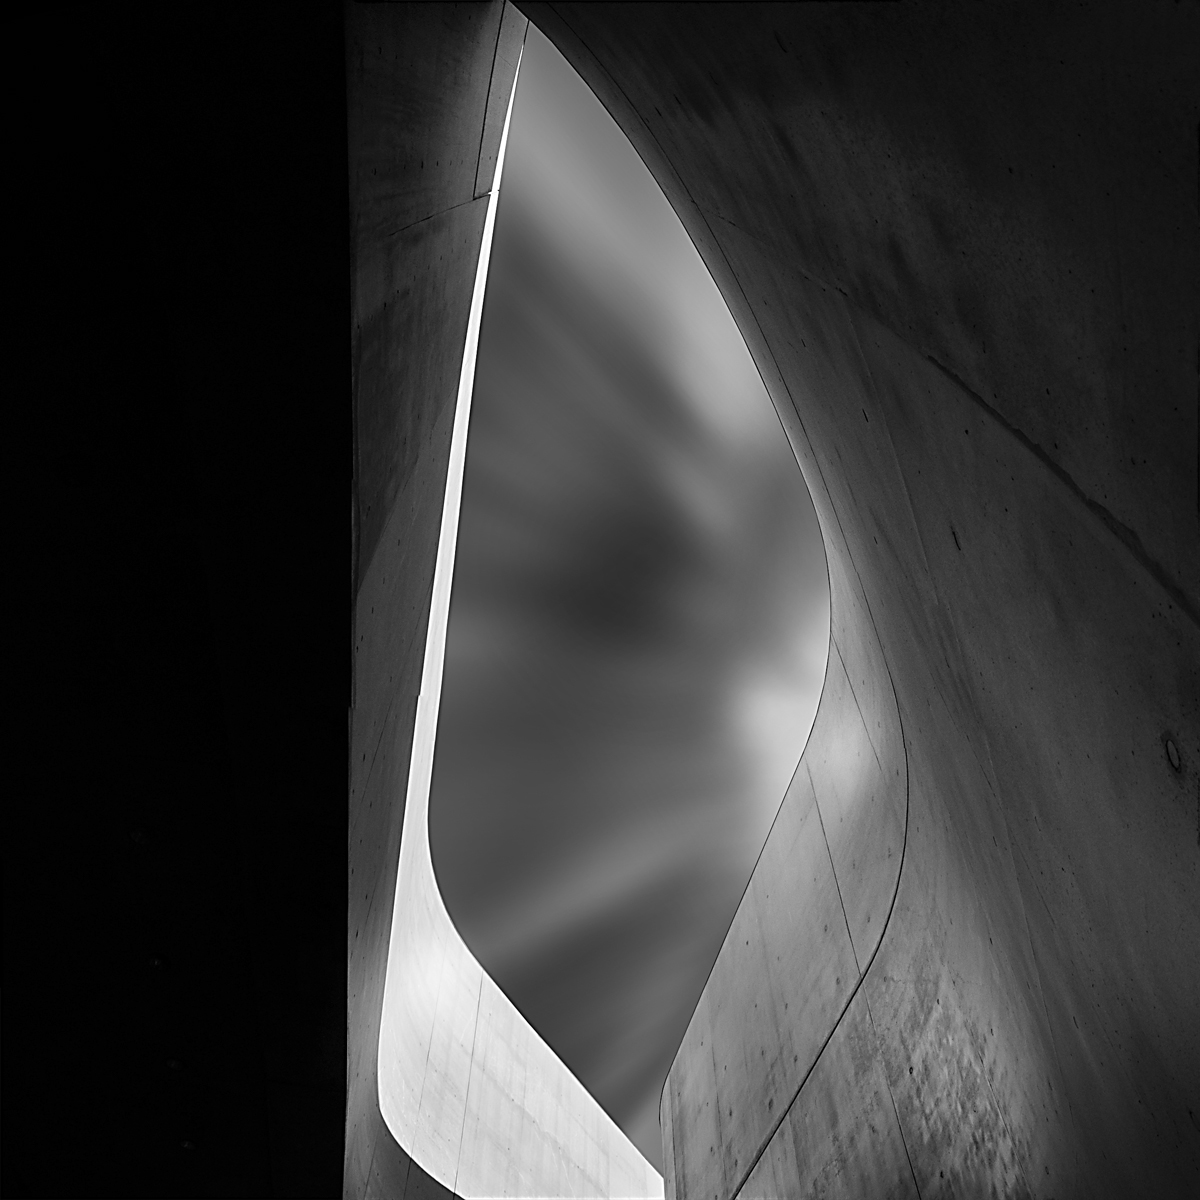  Zaha Hadid Herzog  de Meuron  renzo piano  richard meier Norman Foster Frank Gehry Tadao Ando  vitra  jubilee parco della musica  palazzo civilta museum